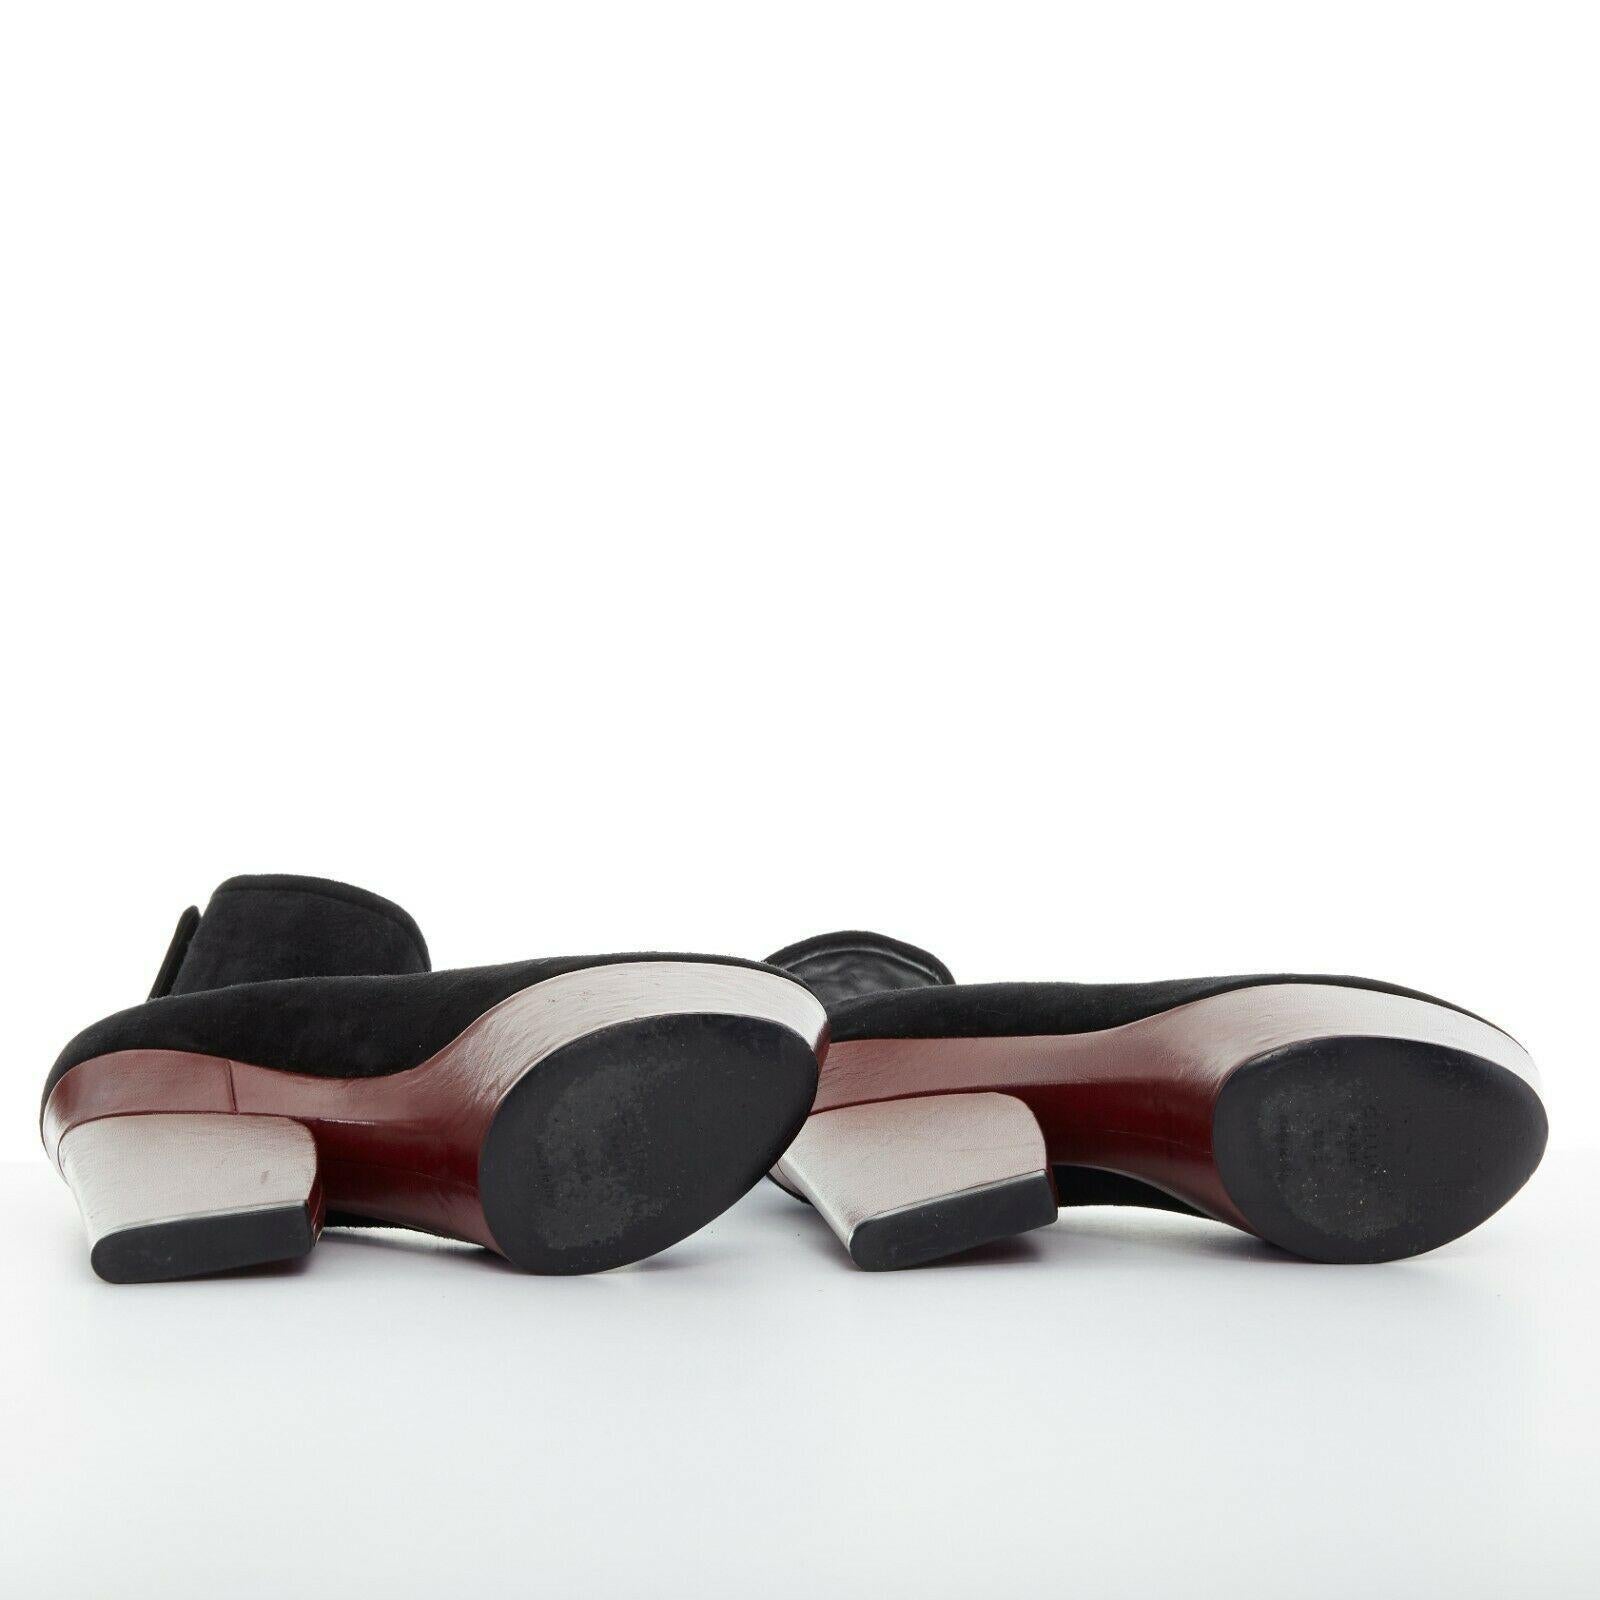 Black CELINE PHOEBE PHILO black suede red platform wedge wide ankle cuff heels EU38.5